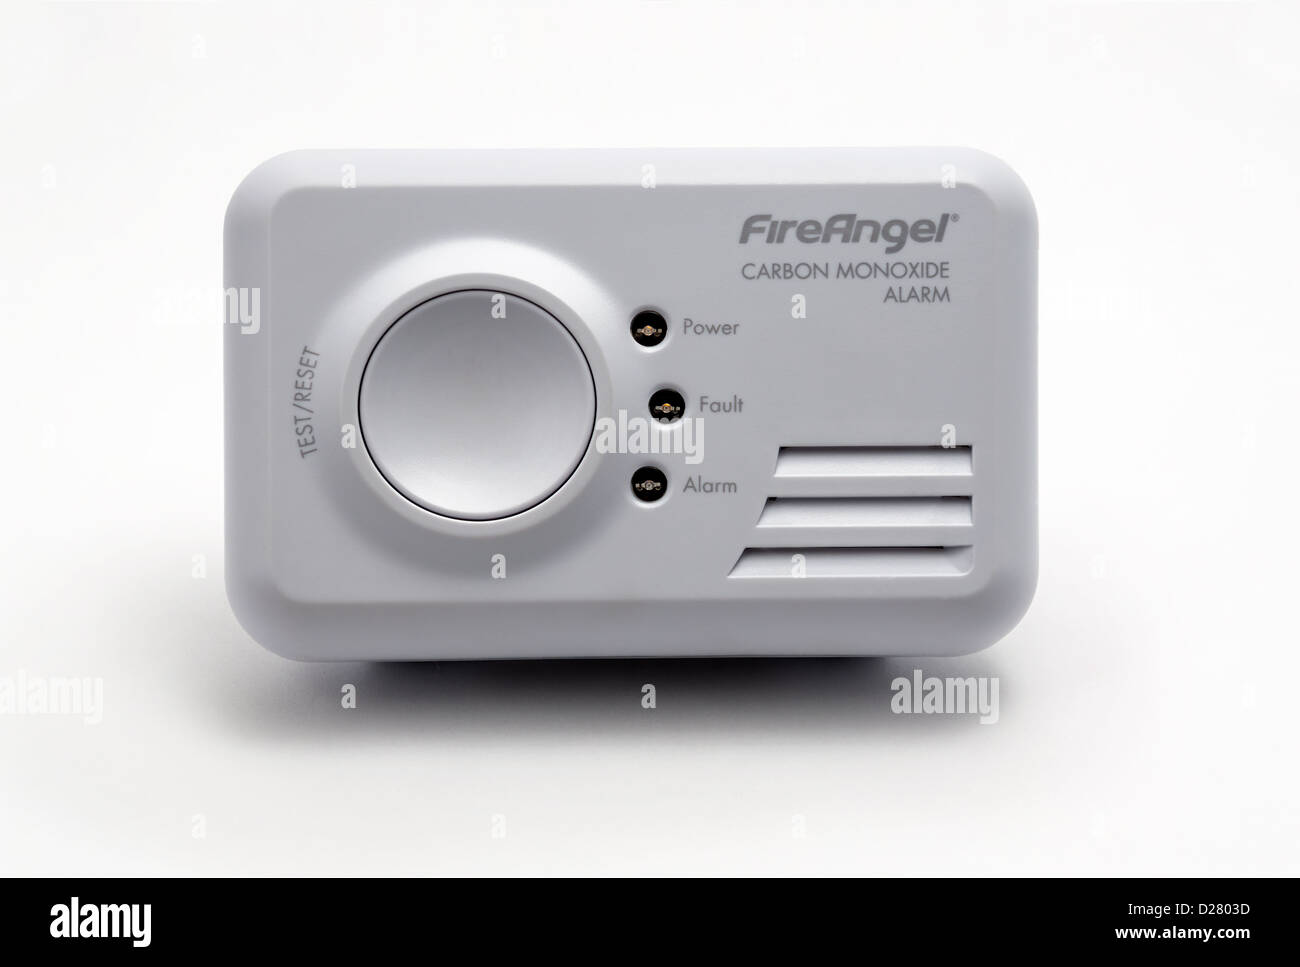 Carbon monixide alarm. Brand name FireAngel. Stock Photo